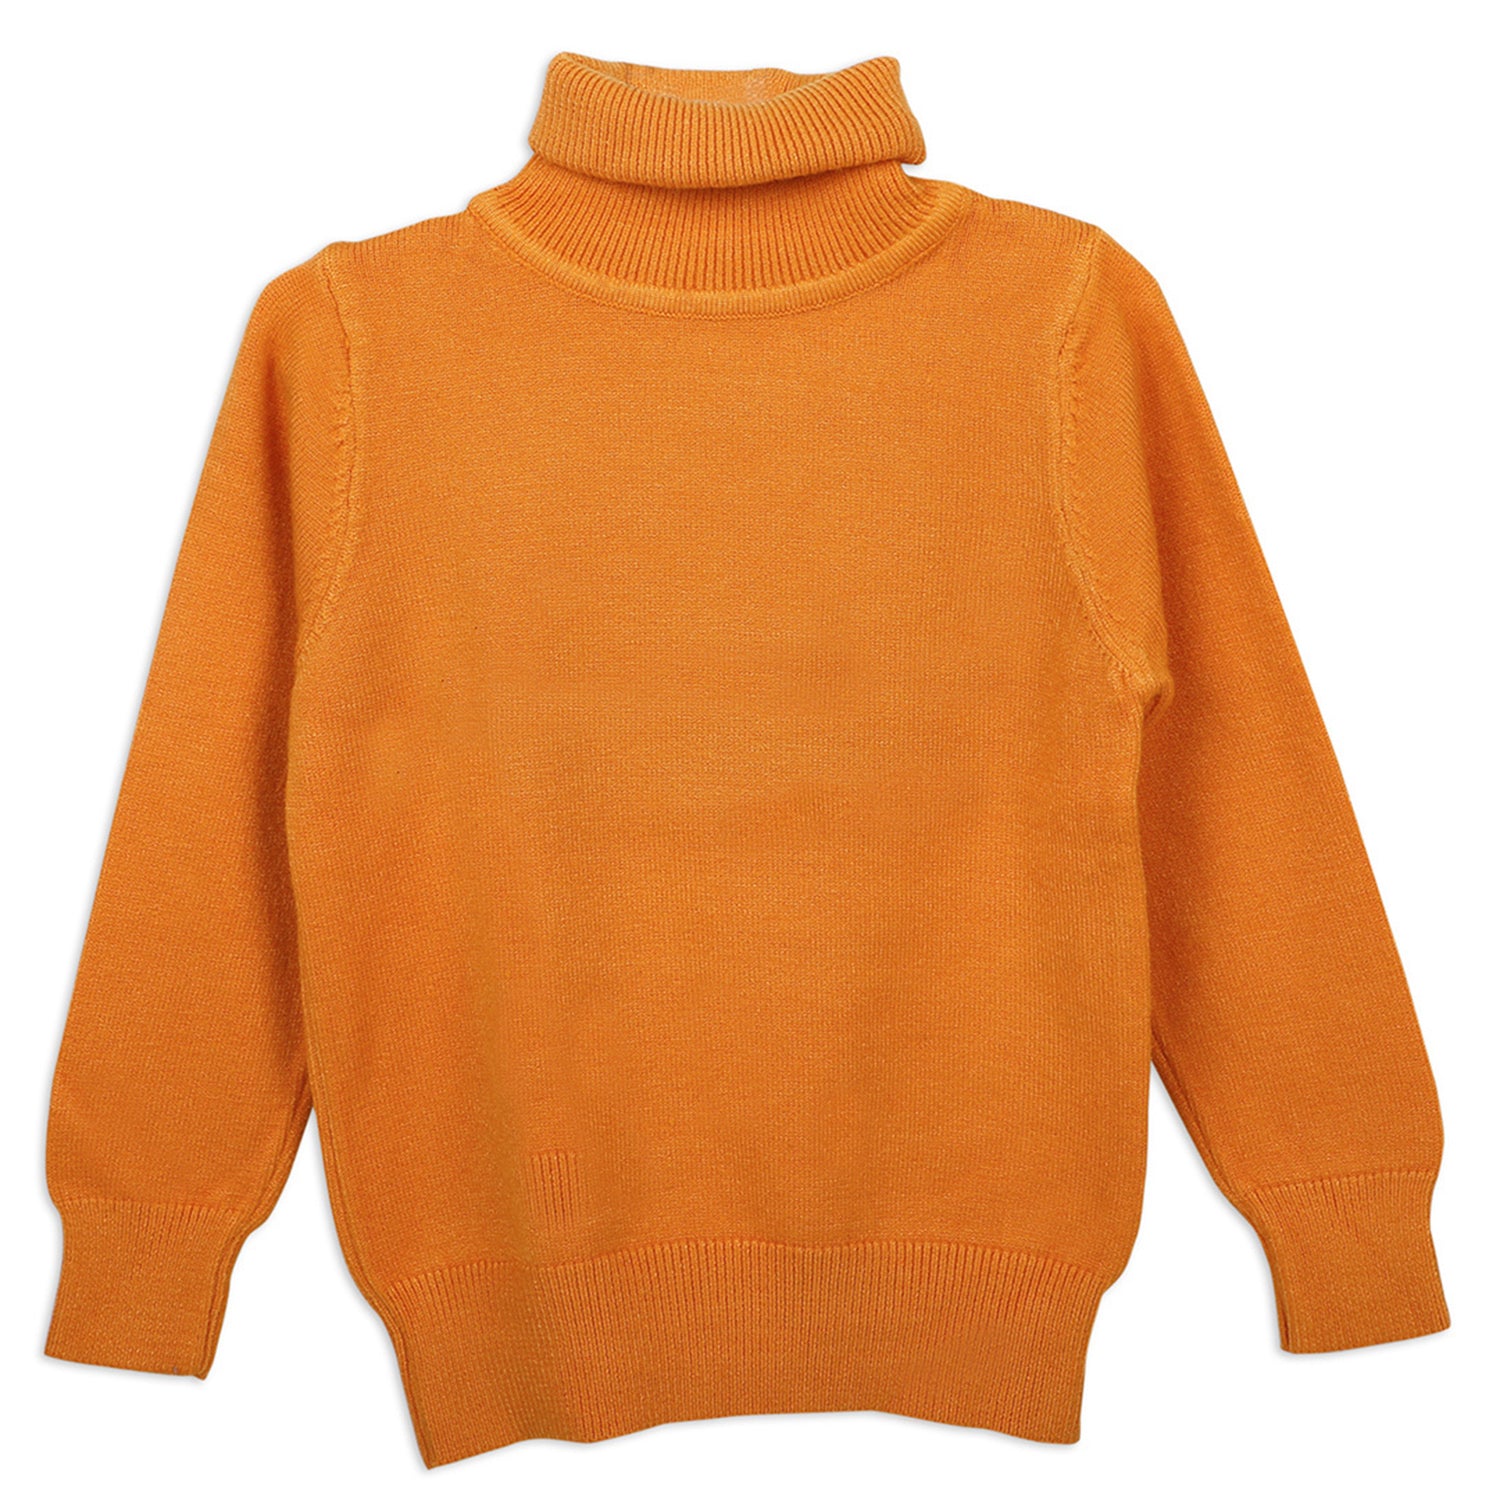 Basic Polo Neck Ribbed Premium Full Sleeves Knitted Kids Sweater - Orange